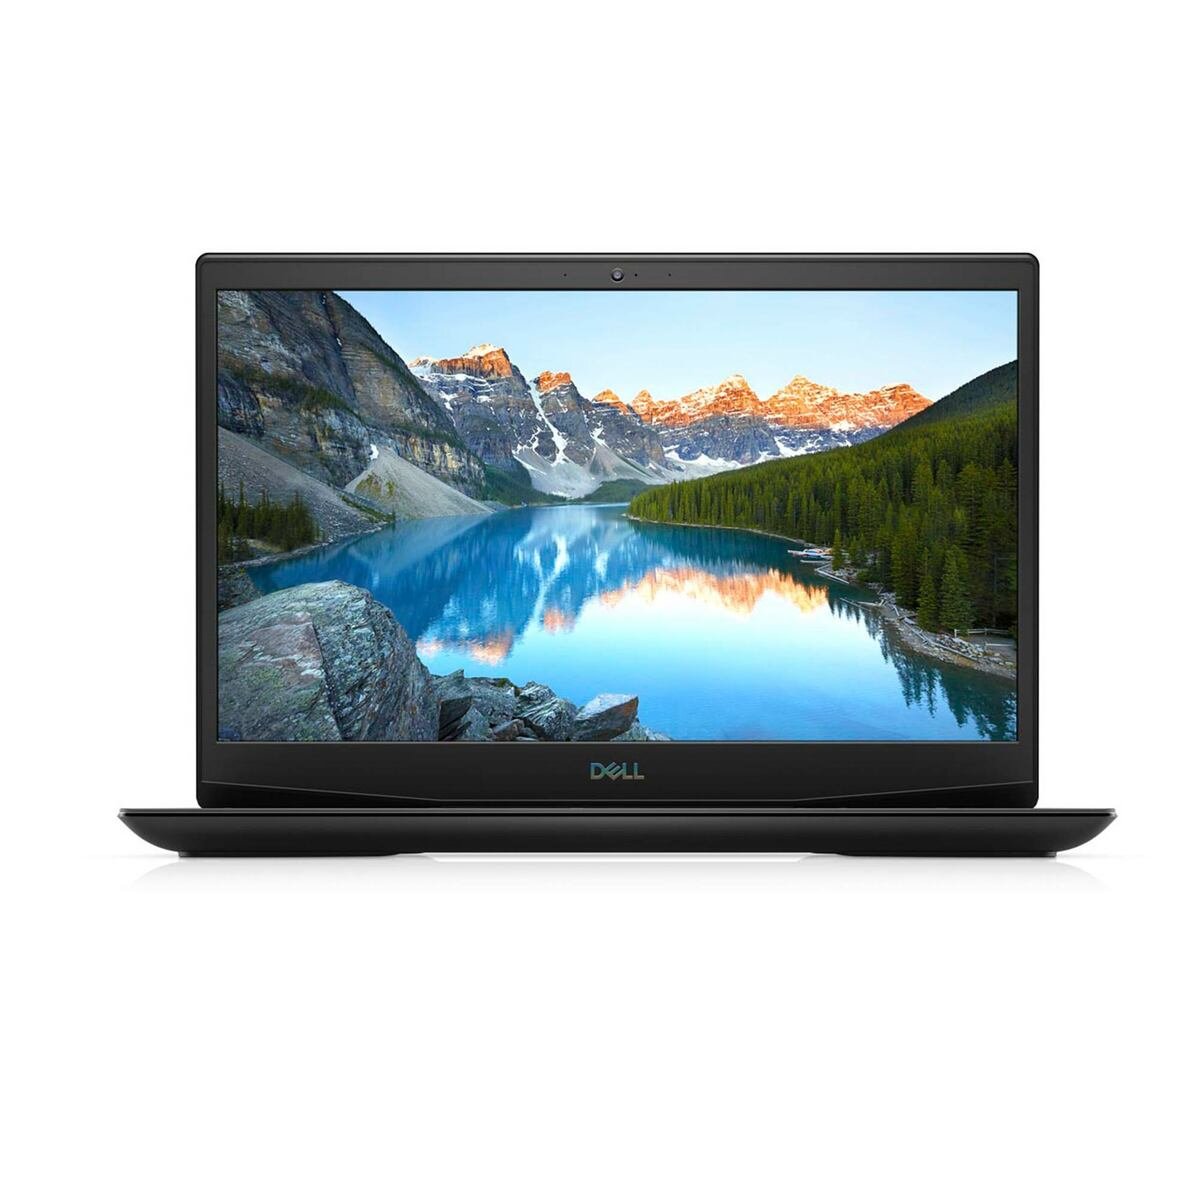 Dell G5 (5500-G5-7800-BLK) Gaming Laptop, Intel Core i5-10300H, 8GB RAM, 512GB SSD, 4GB NVIDIA Ge Force GTX 1650Ti, 15.6" Full HD Display, Windows 10, Black